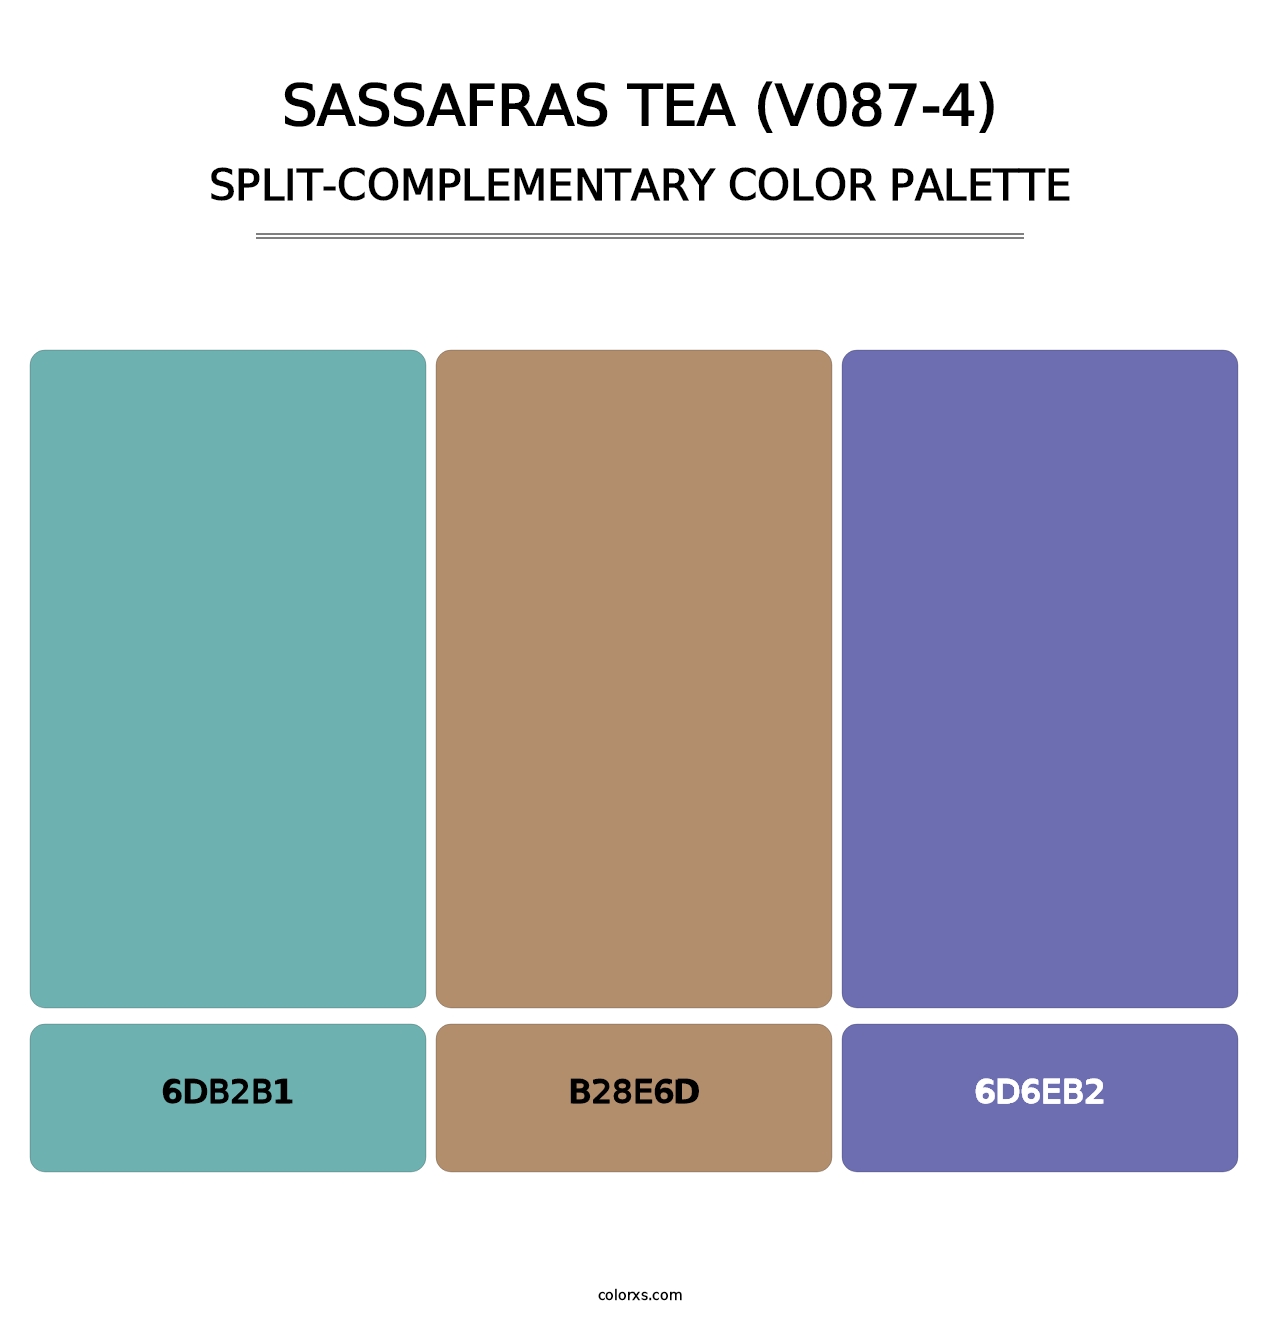 Sassafras Tea (V087-4) - Split-Complementary Color Palette